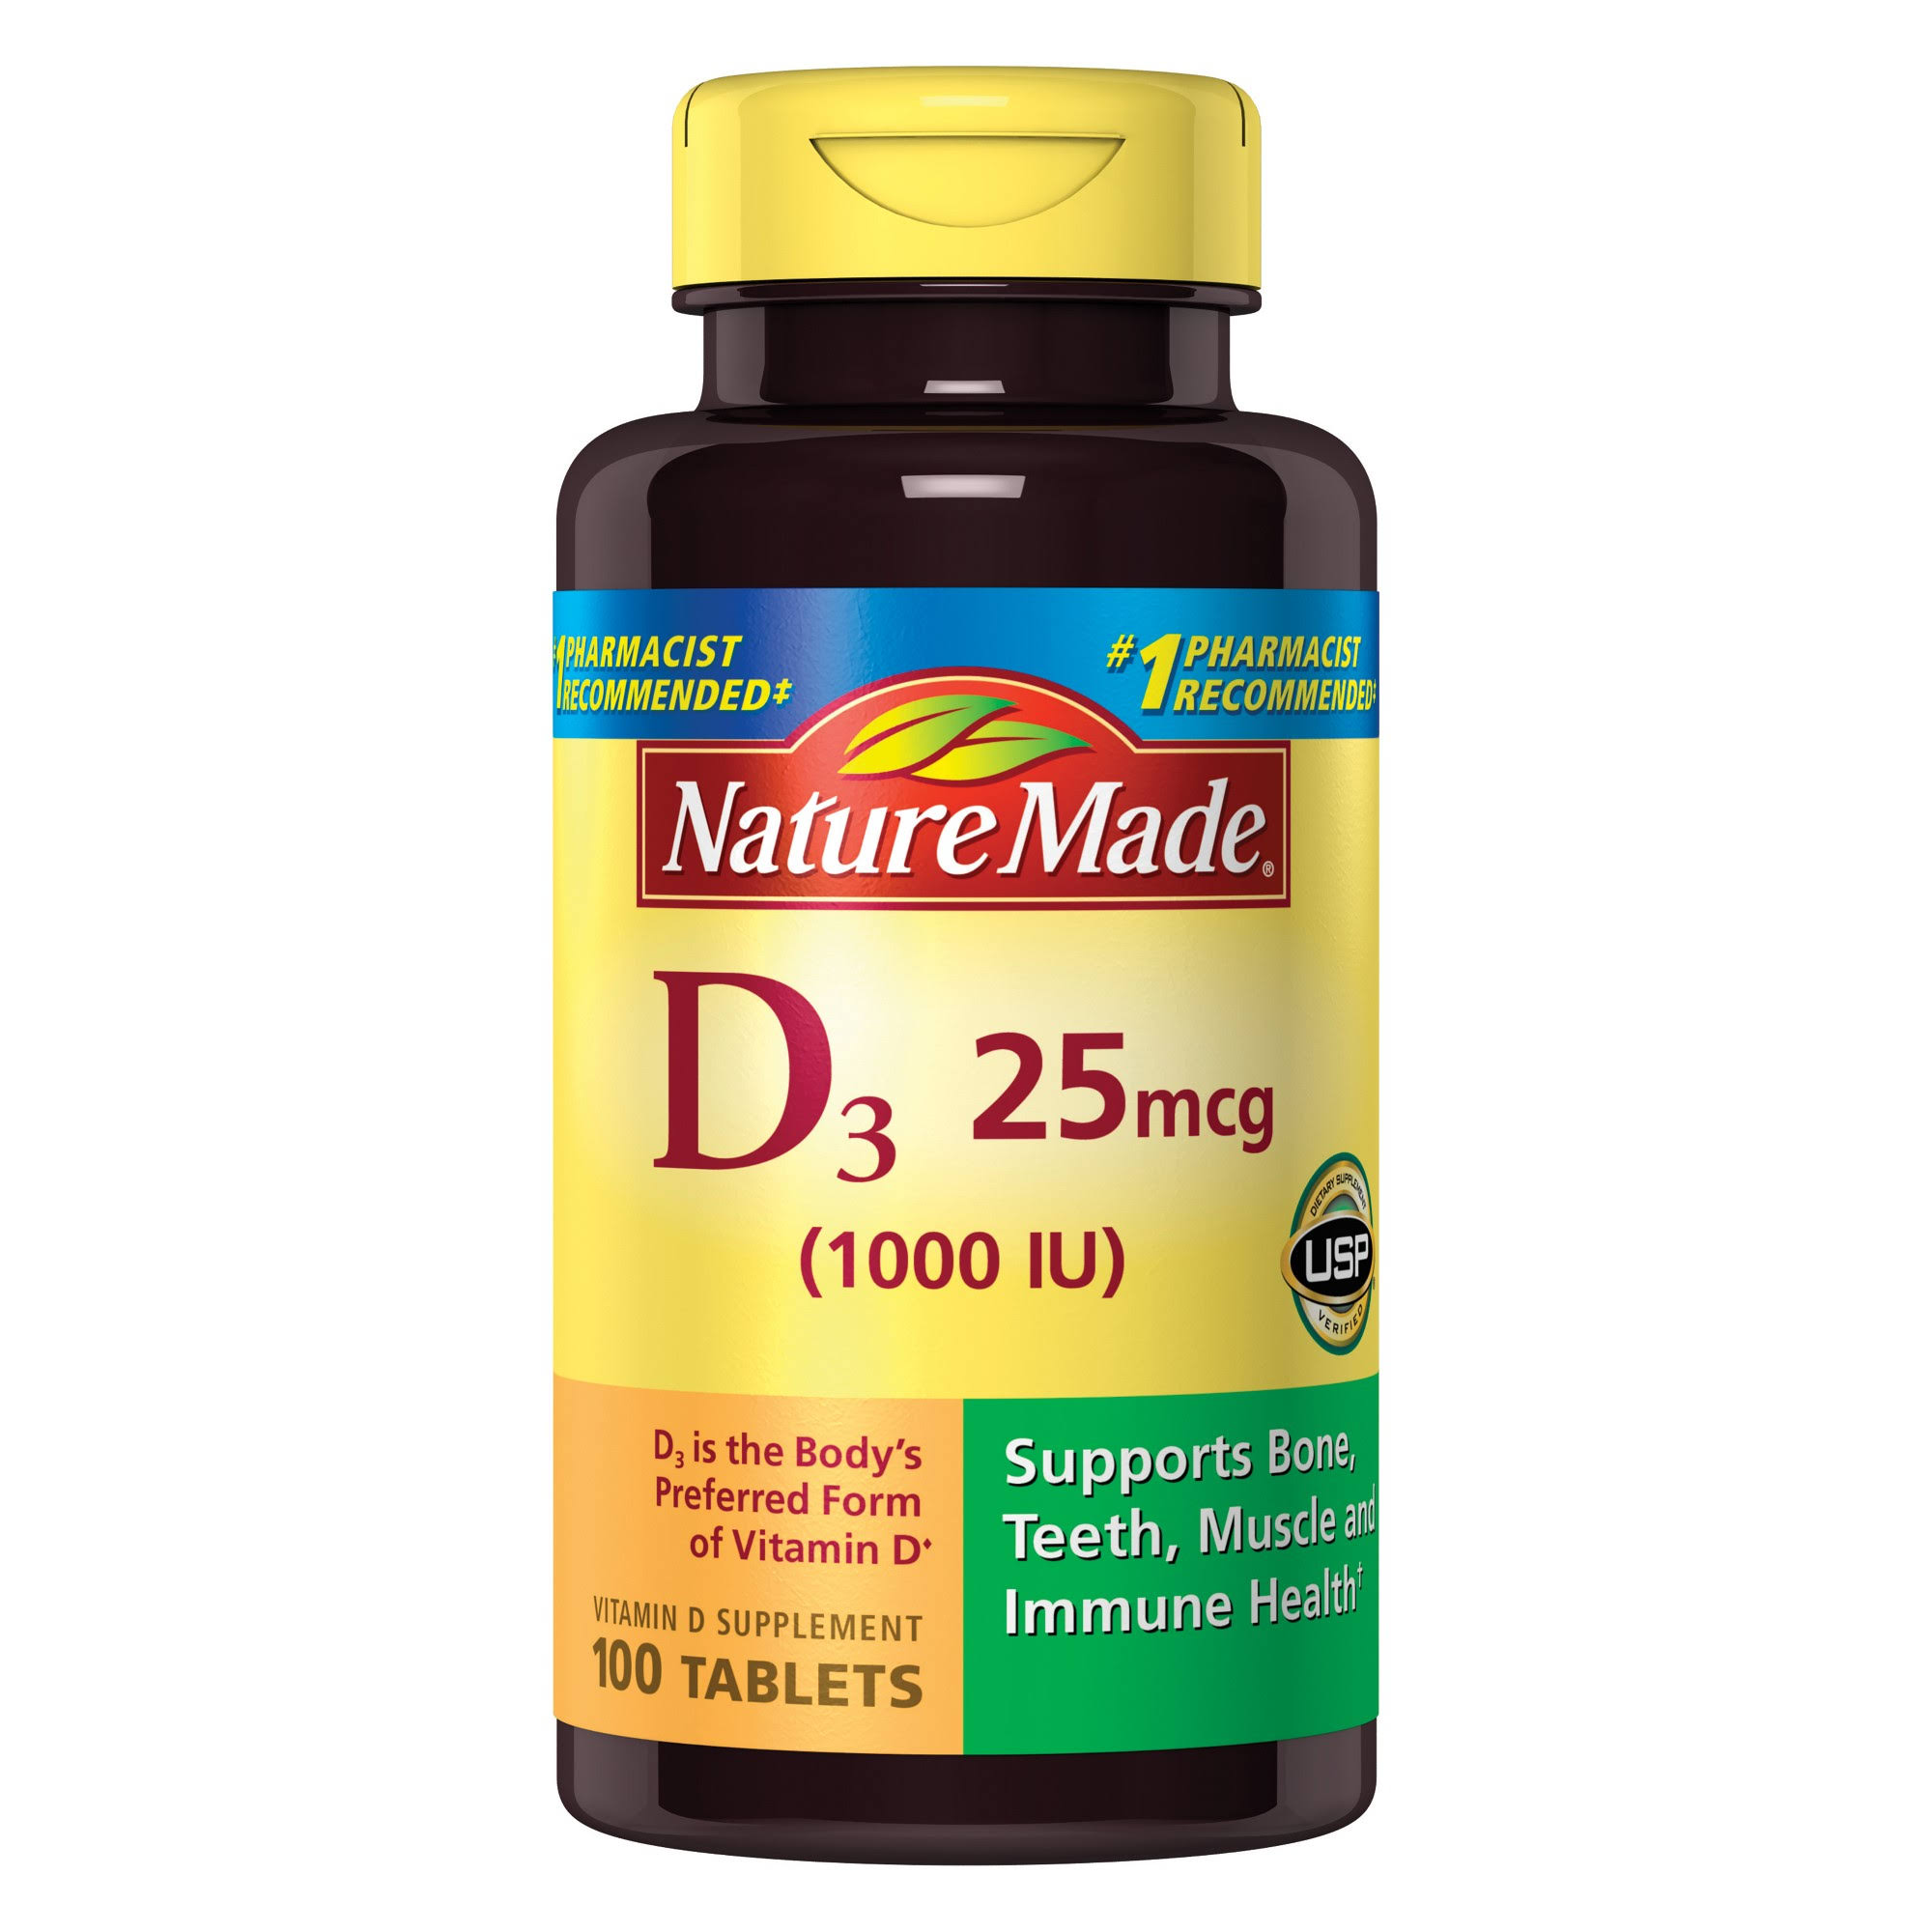 Nature Made D3 1000iu Vitamin D Supplement Tablets - 100ct